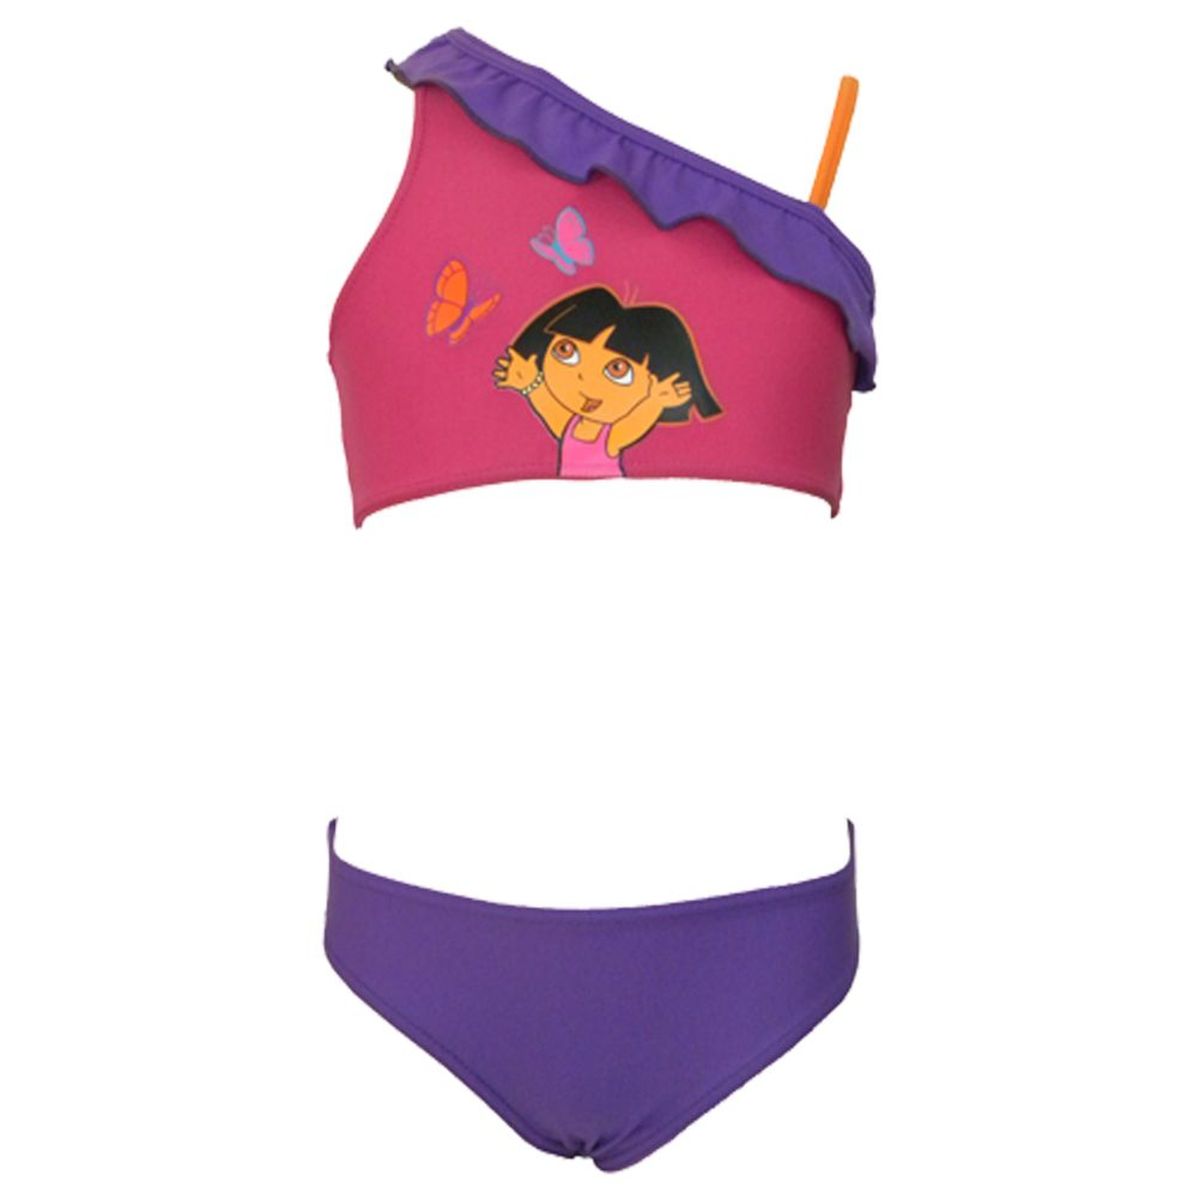 Dora the Explorer swimsuit